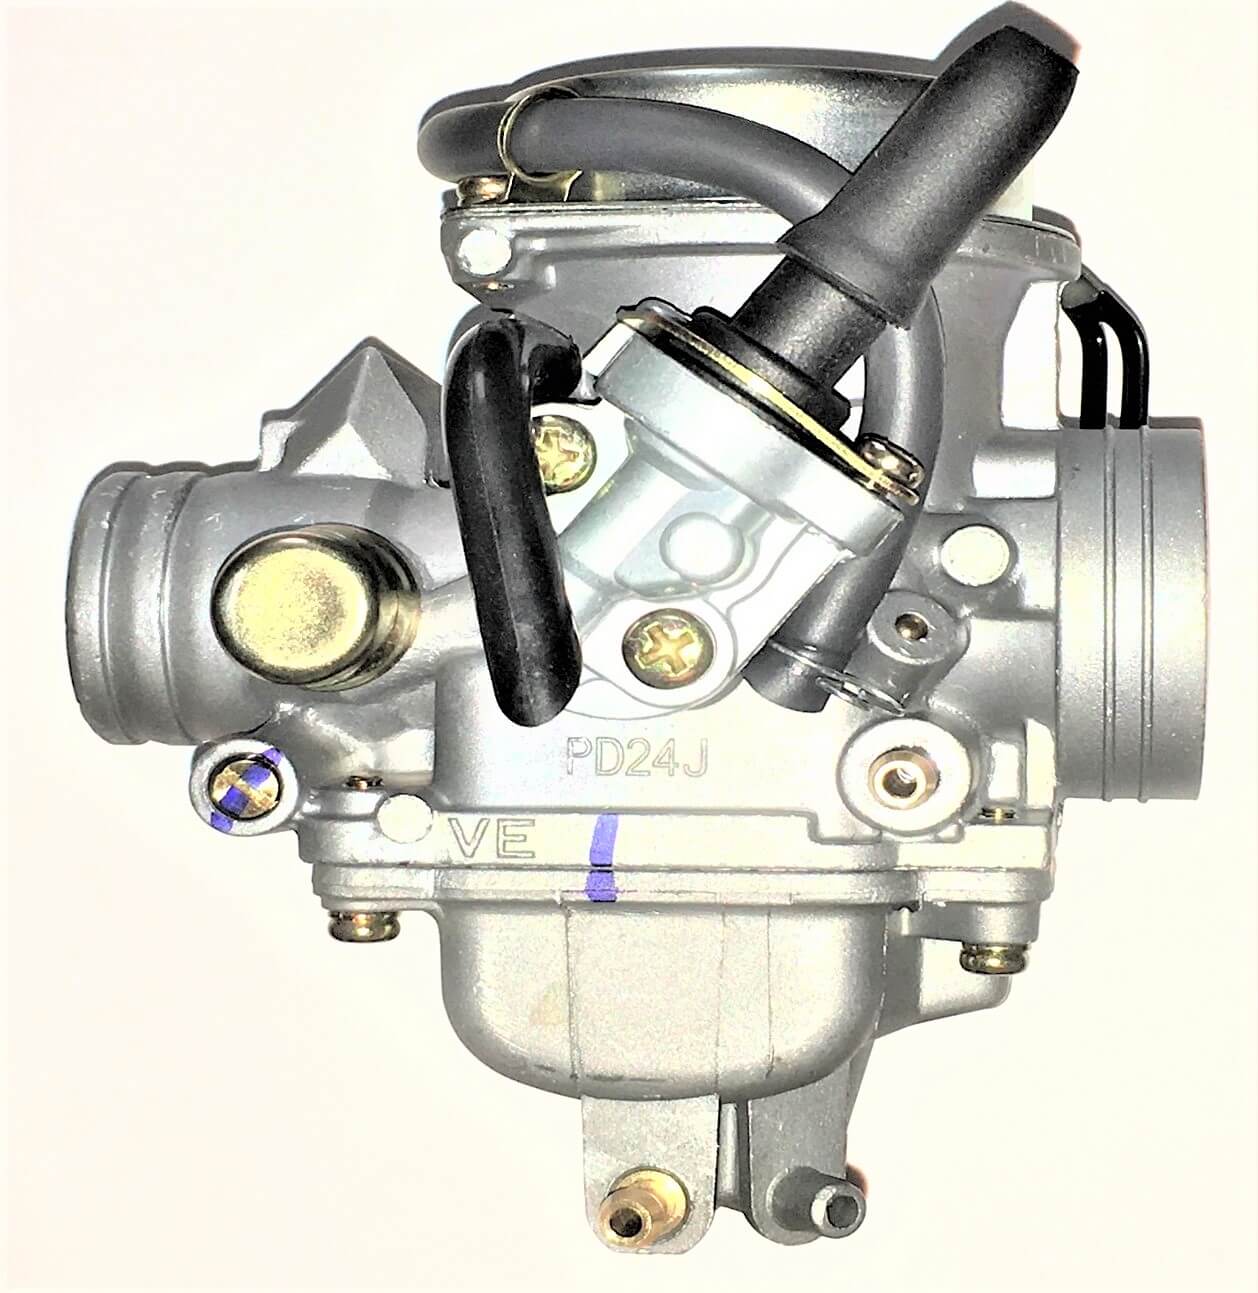 Kei Hin Style Carburetor Manual Choke 150-250cc Fits E-Ton Yukon YXL150, CXL150, Viper RXL150R ATVs & Beamer R4-150, Matrix 150 Scooters + Others Intake OD=32mm, Air Box OD=42mm - Click Image to Close